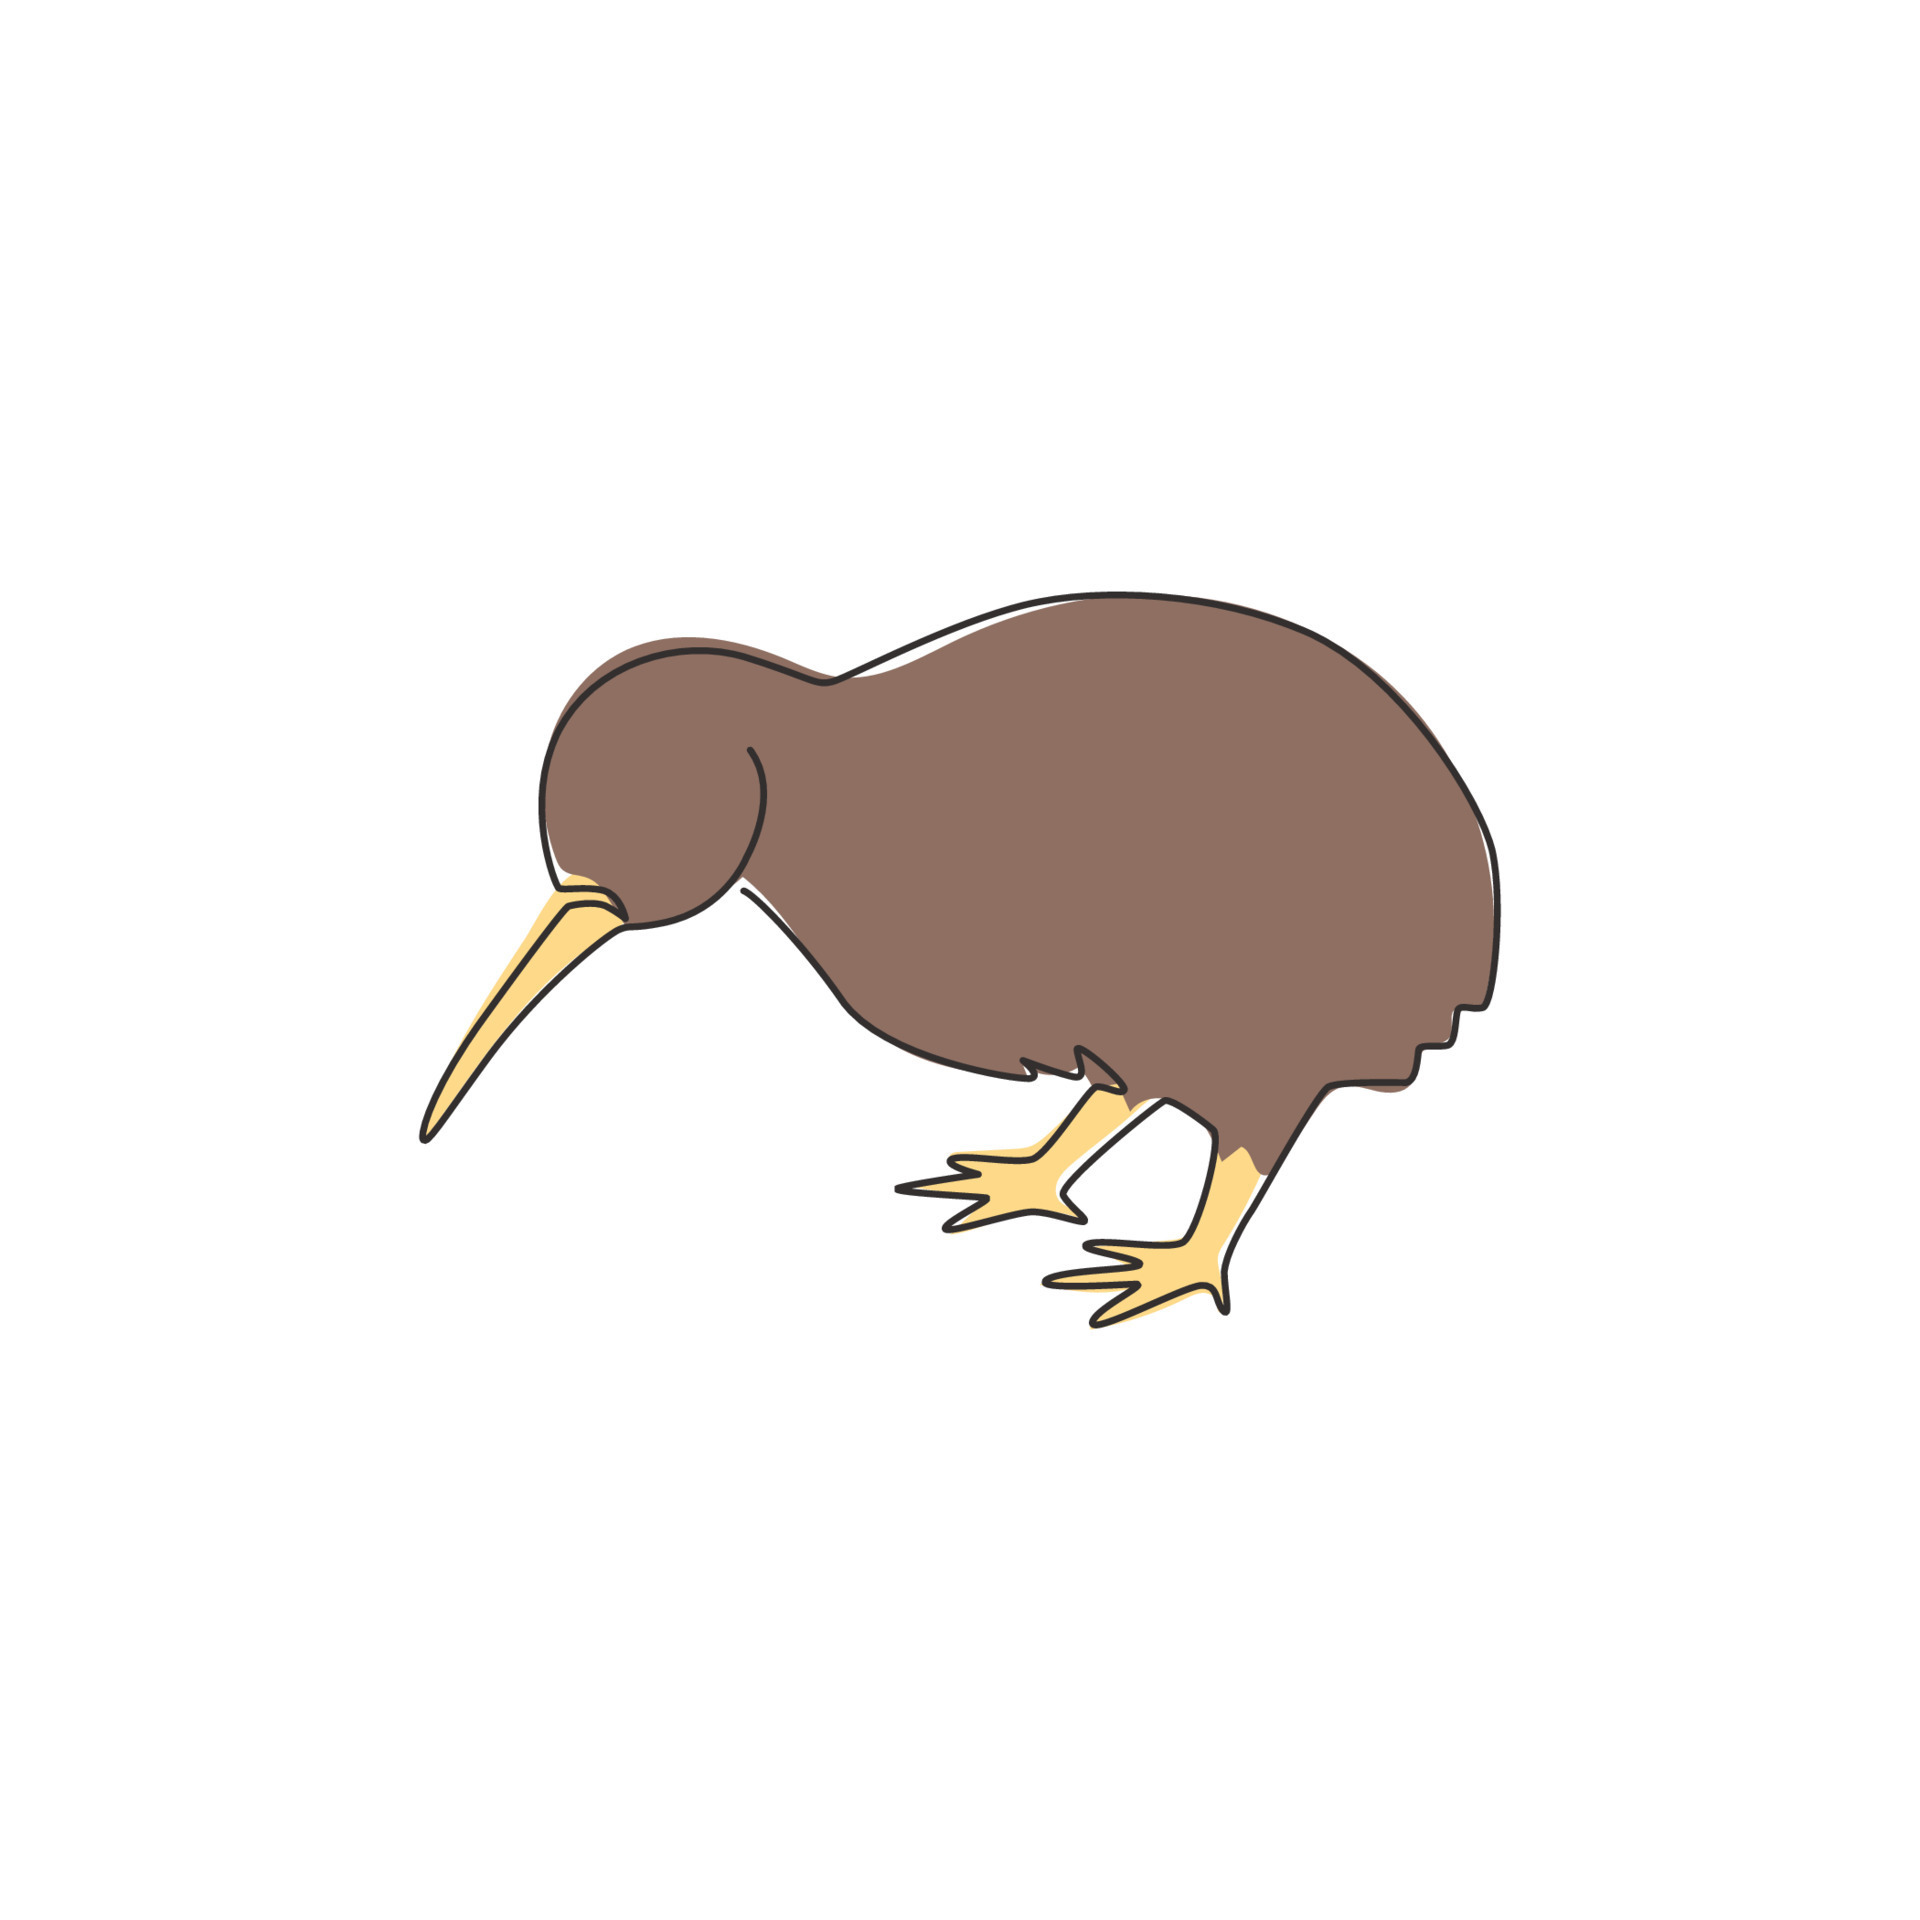 Kiwi Bird Drawing Stock Photos - Free & Royalty-Free Stock Photos from  Dreamstime